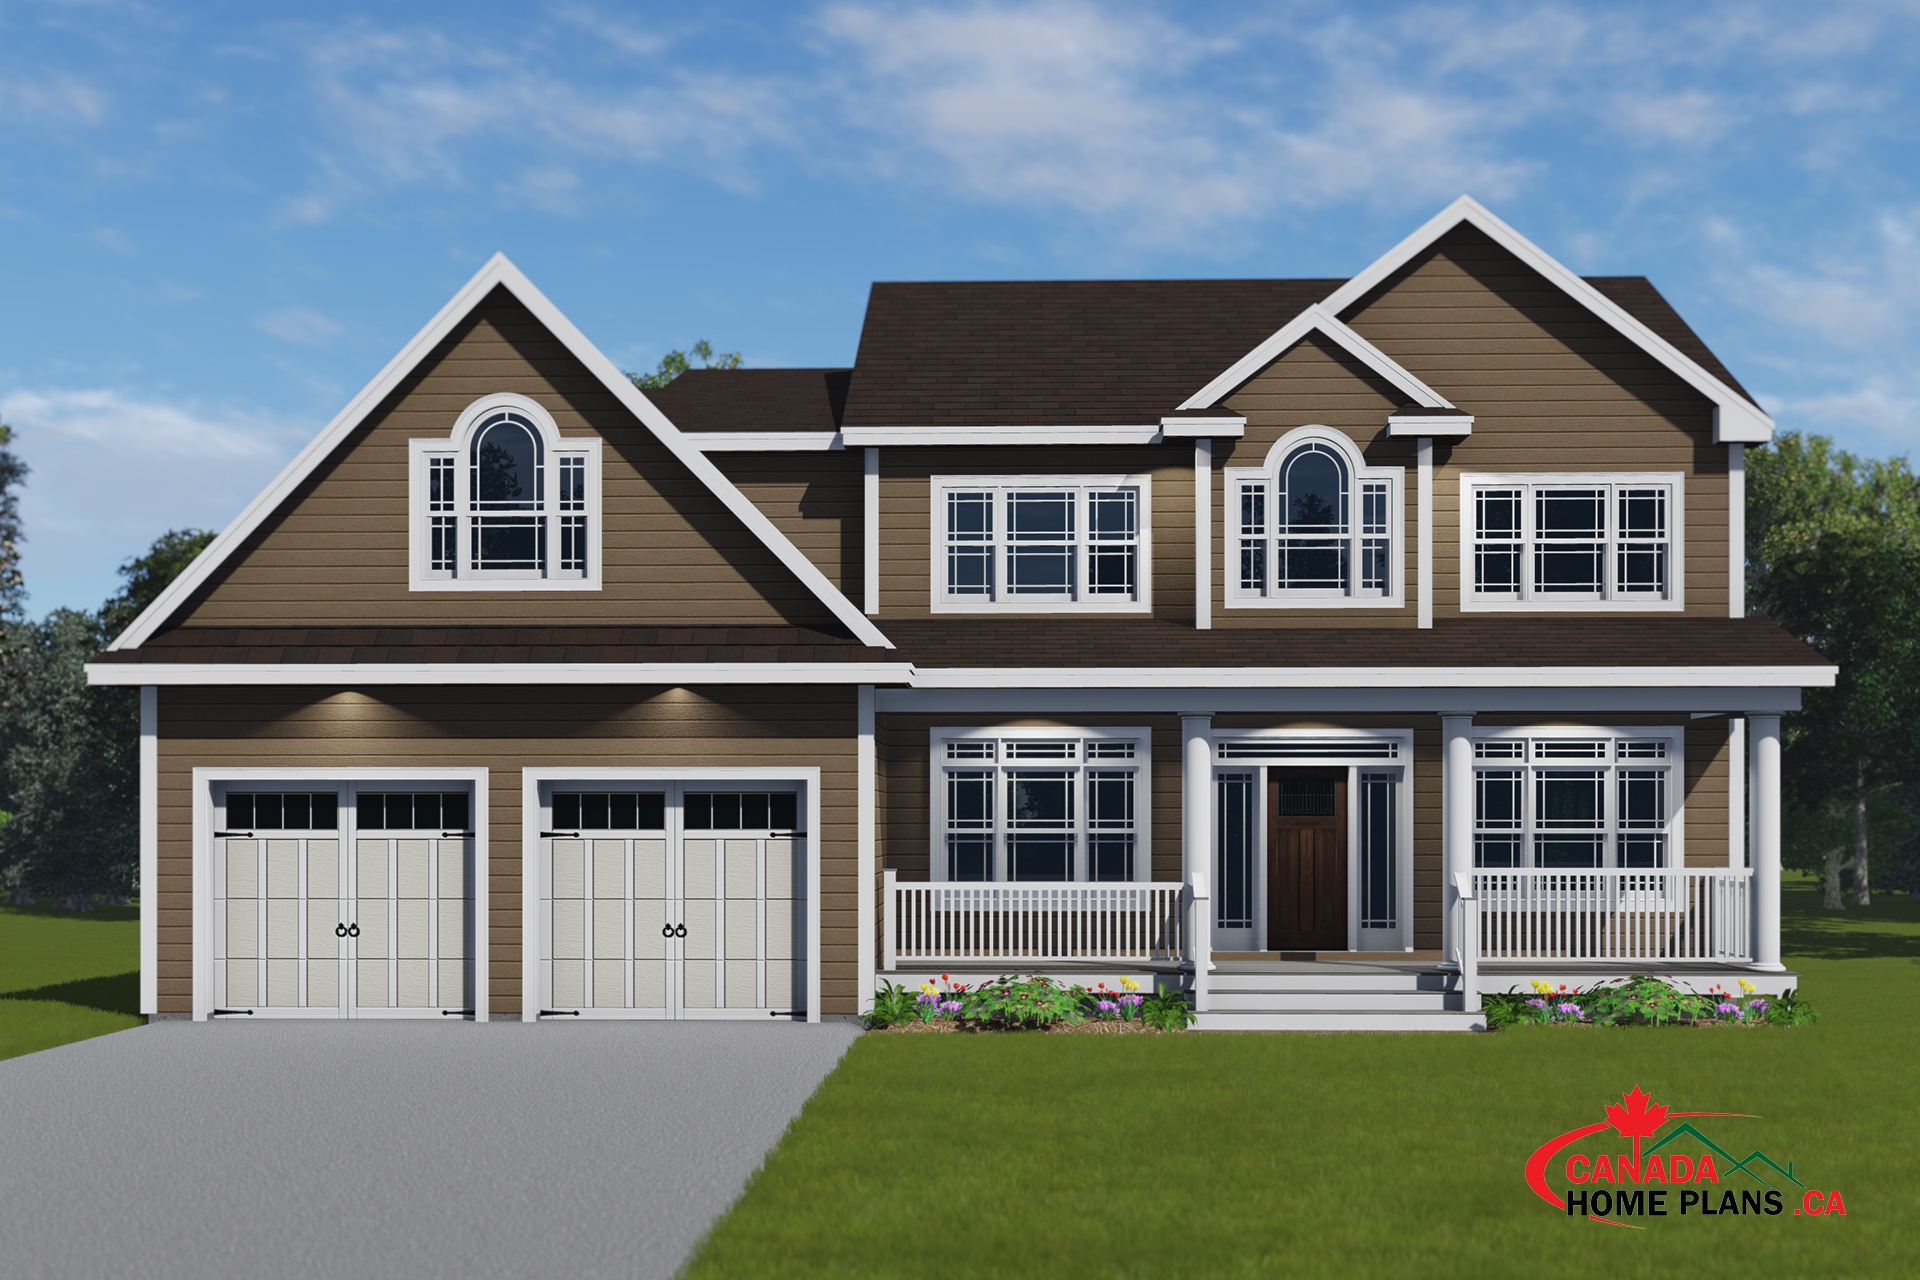 Clarenville - Canada Home Plans